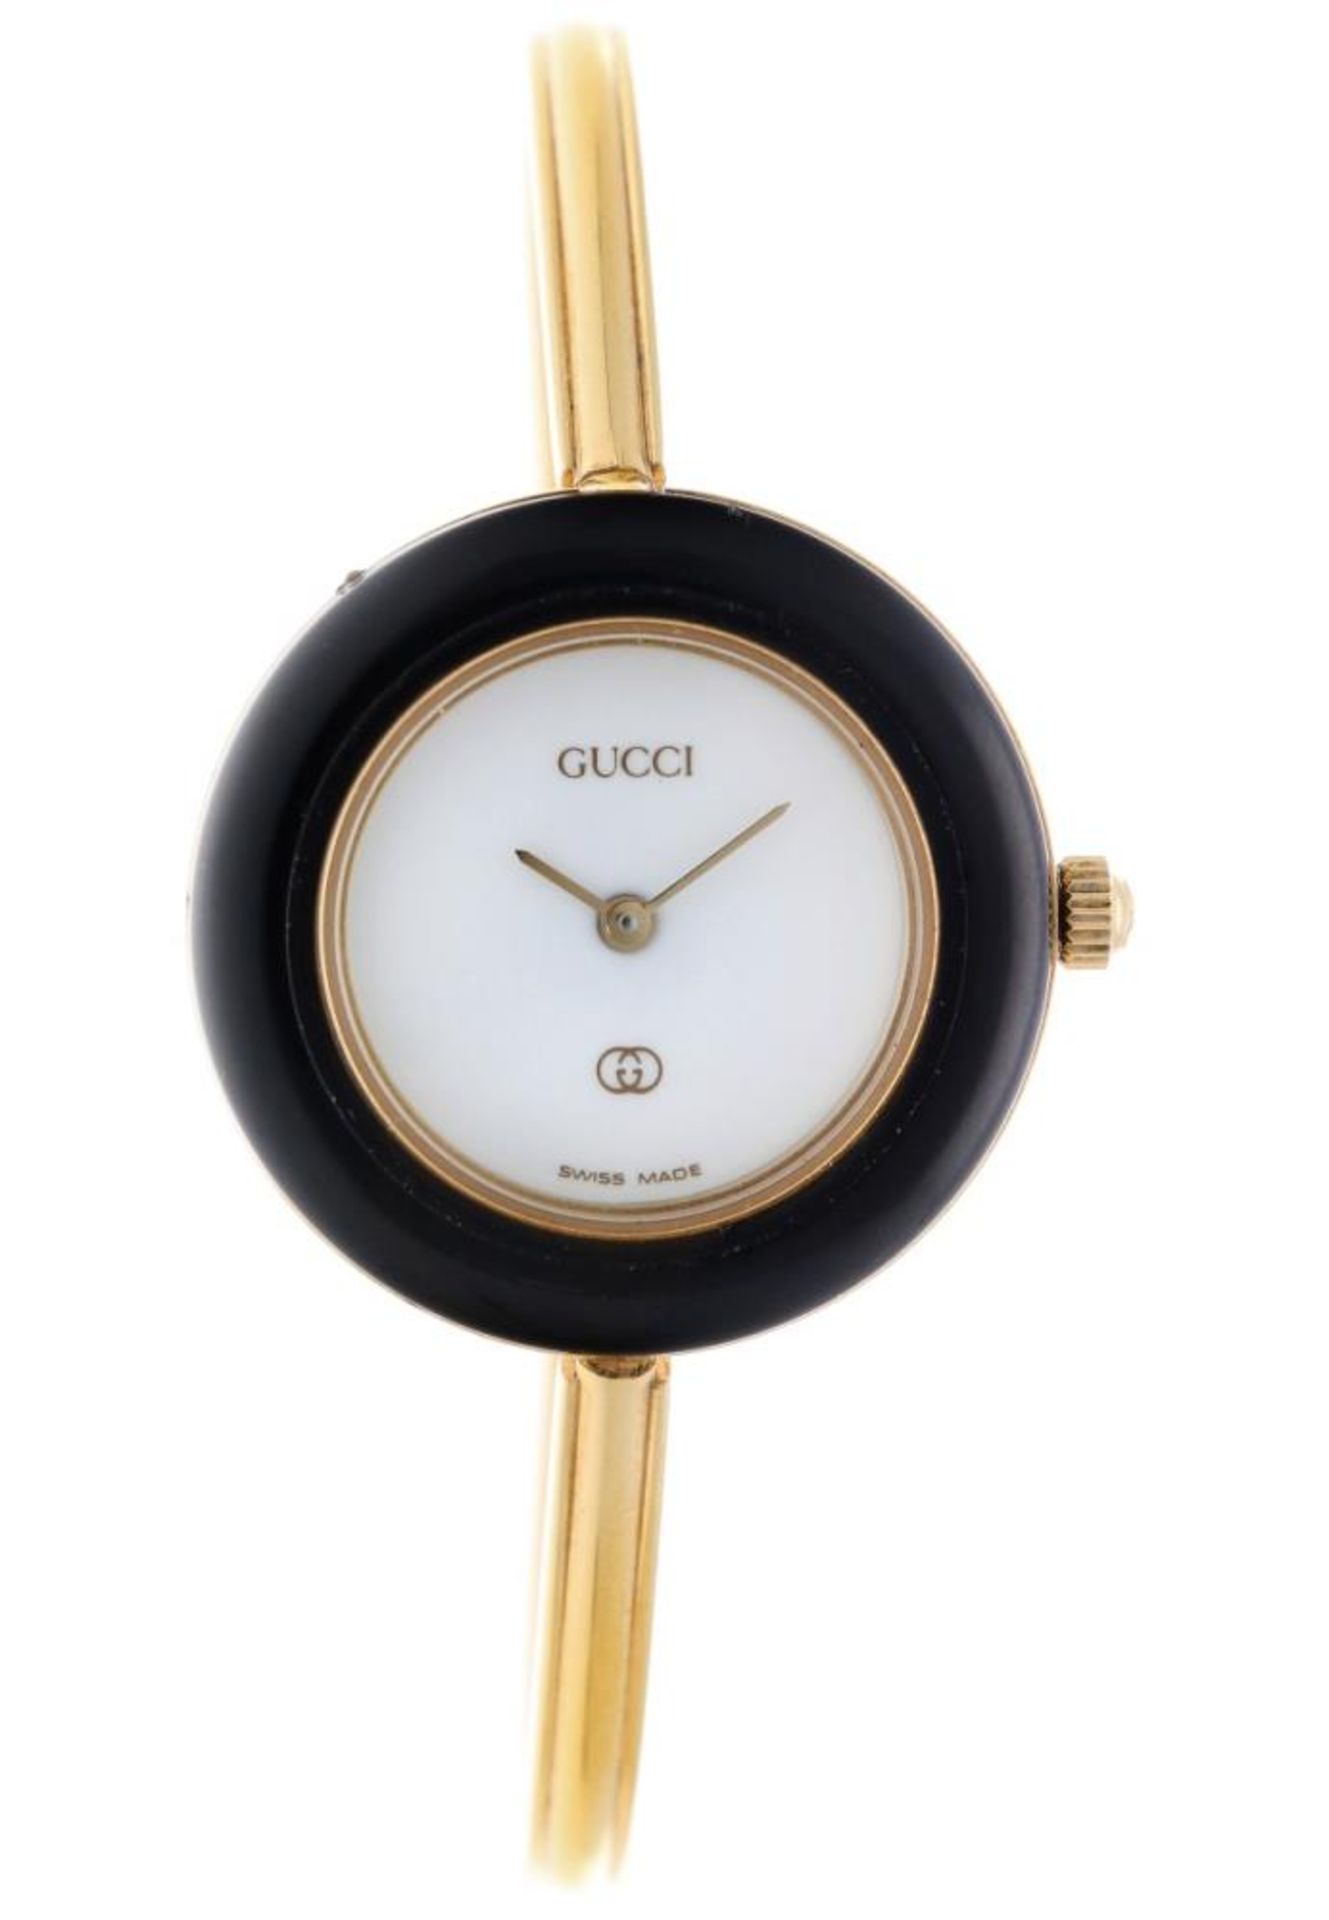 Gucci 1100L - Ladies watch - approx. 1989.